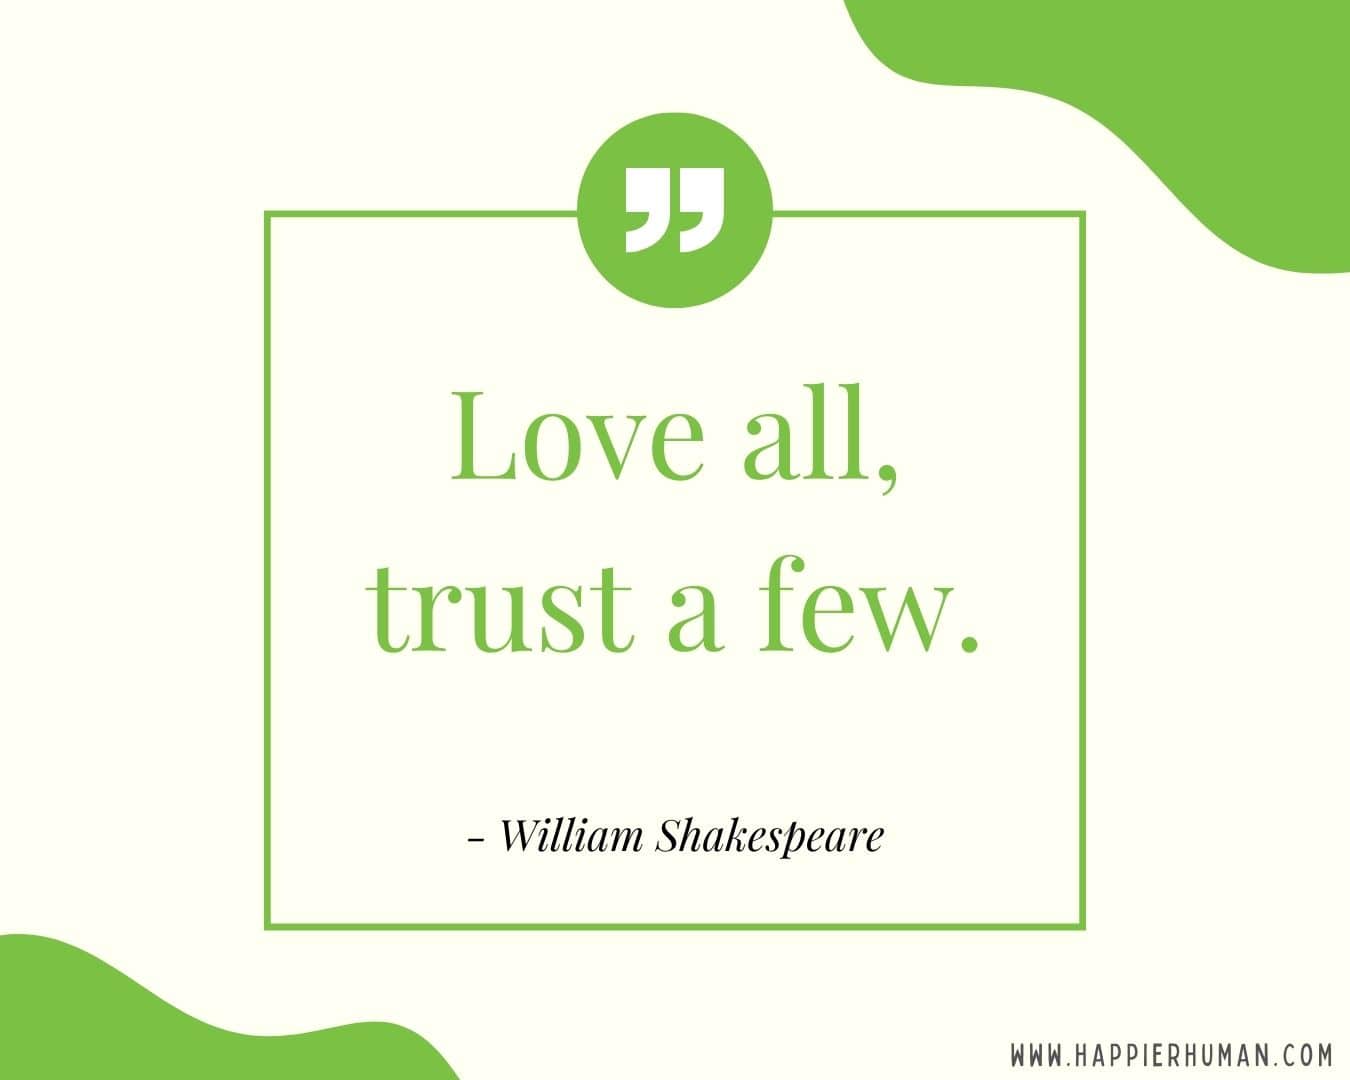 Broken Trust Quotes - “Love all, trust a few.” - William Shakespeare